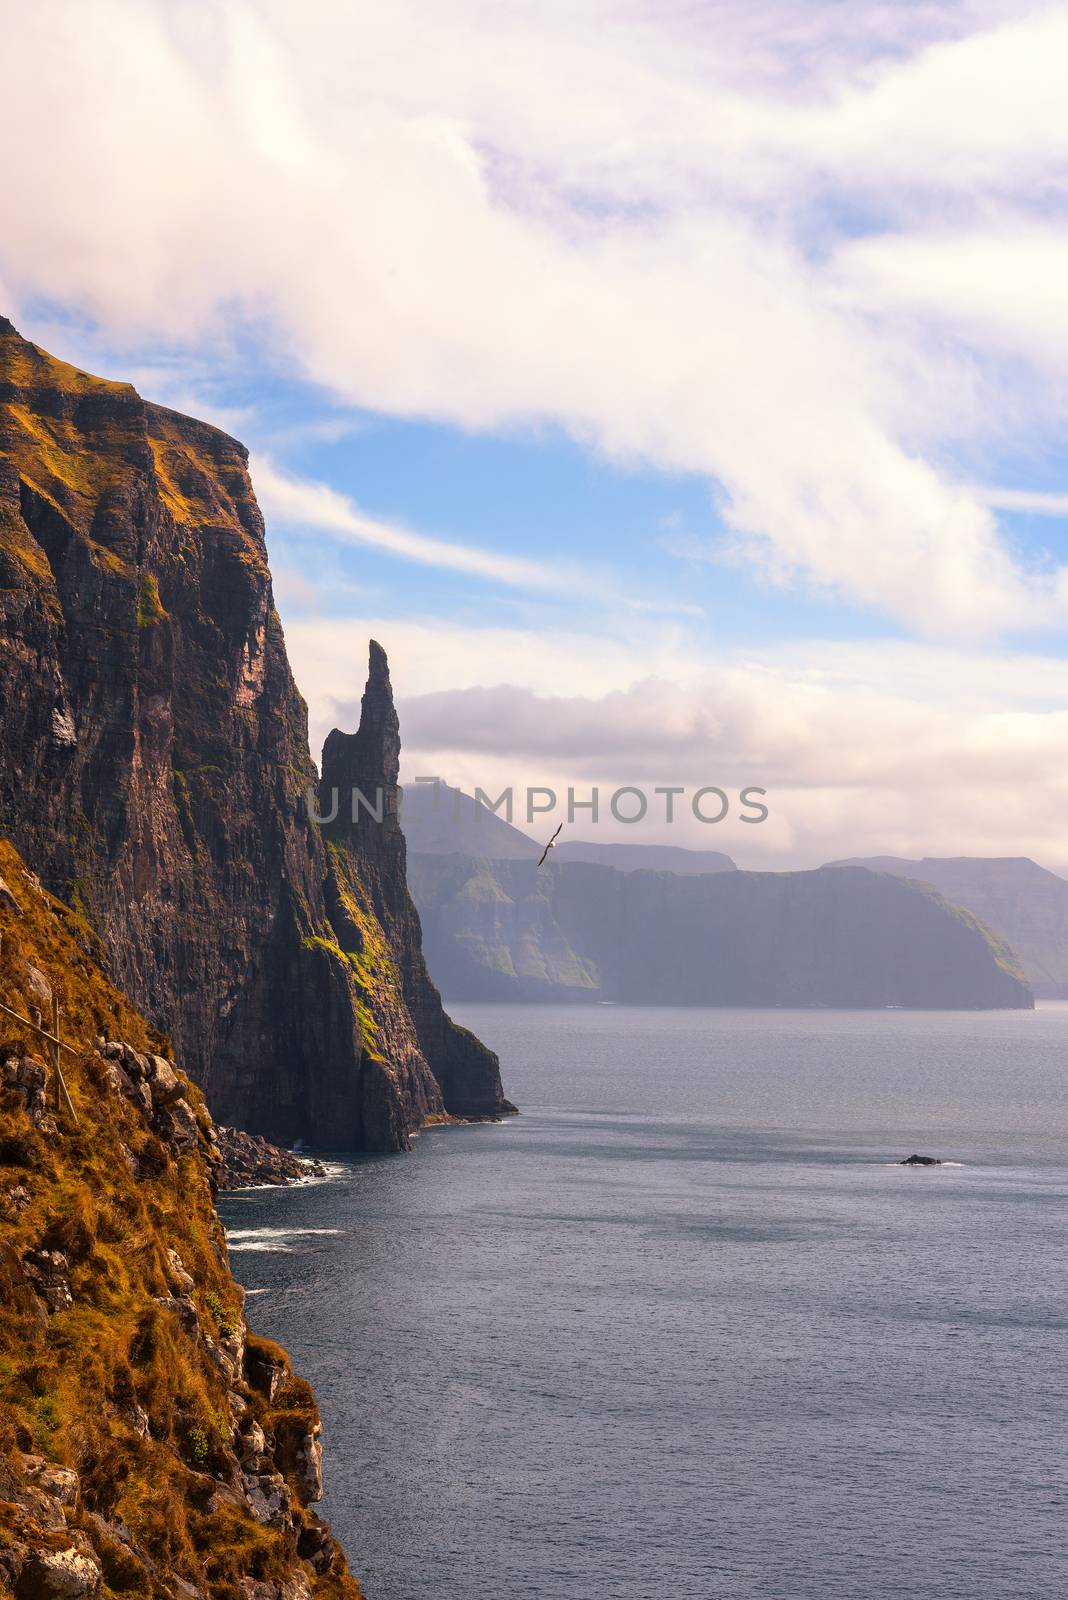 Trollkonufingur rock, also called The Witch's Finger on the island of Vagar. Trollkonufingur is a freestanding sea stack rock on the east of Sandavagur village on the Faroe Islands.